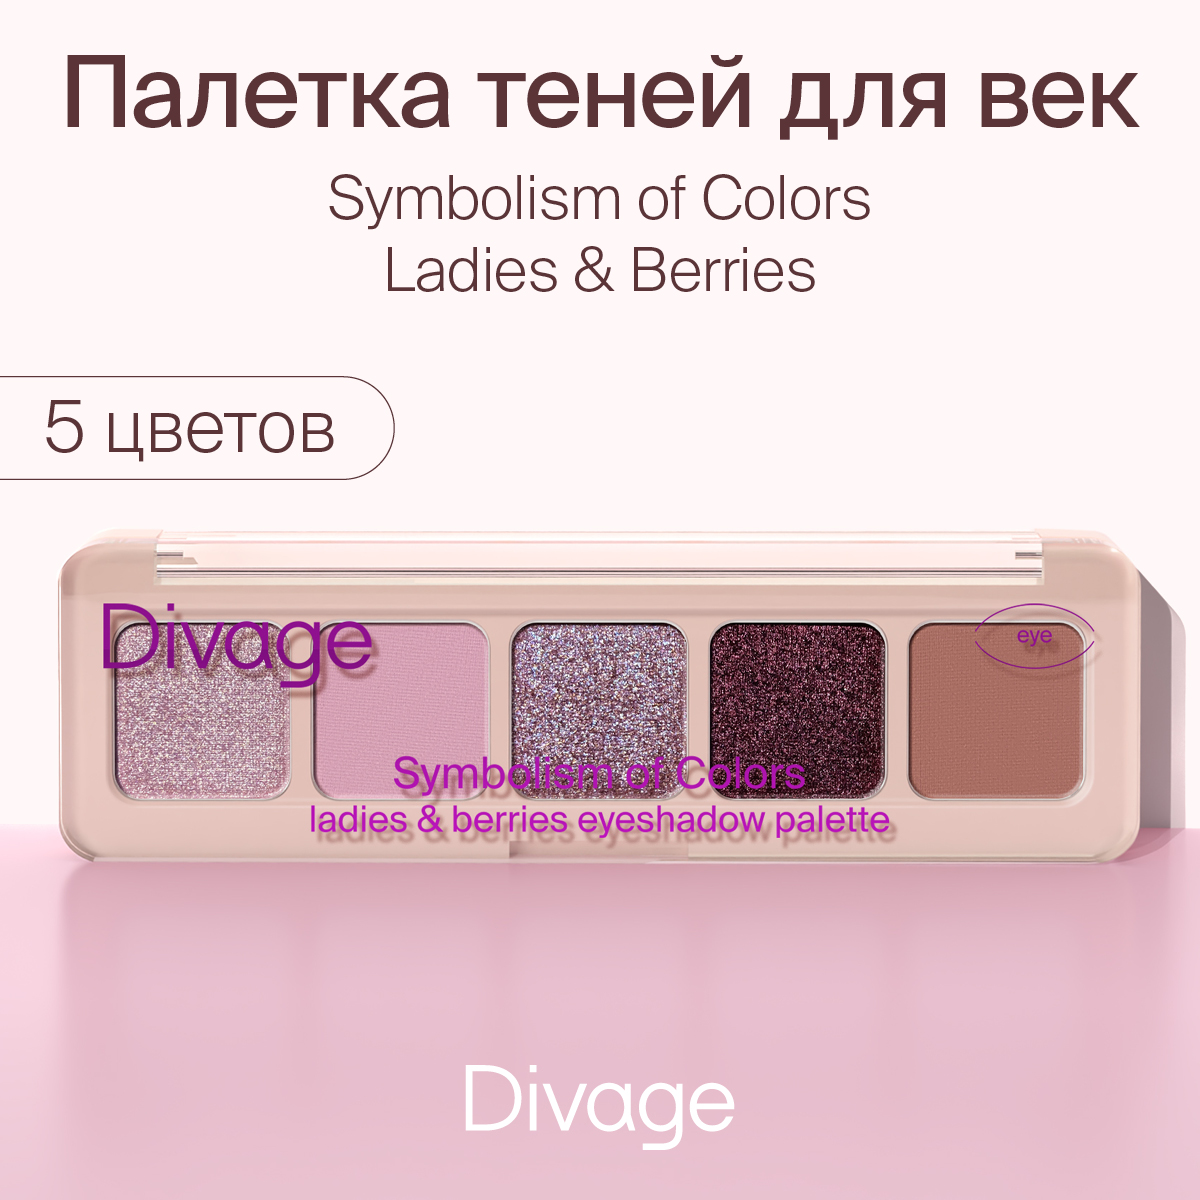 Палетка теней для век Divage Symbolism of Colors Ladies&Berries